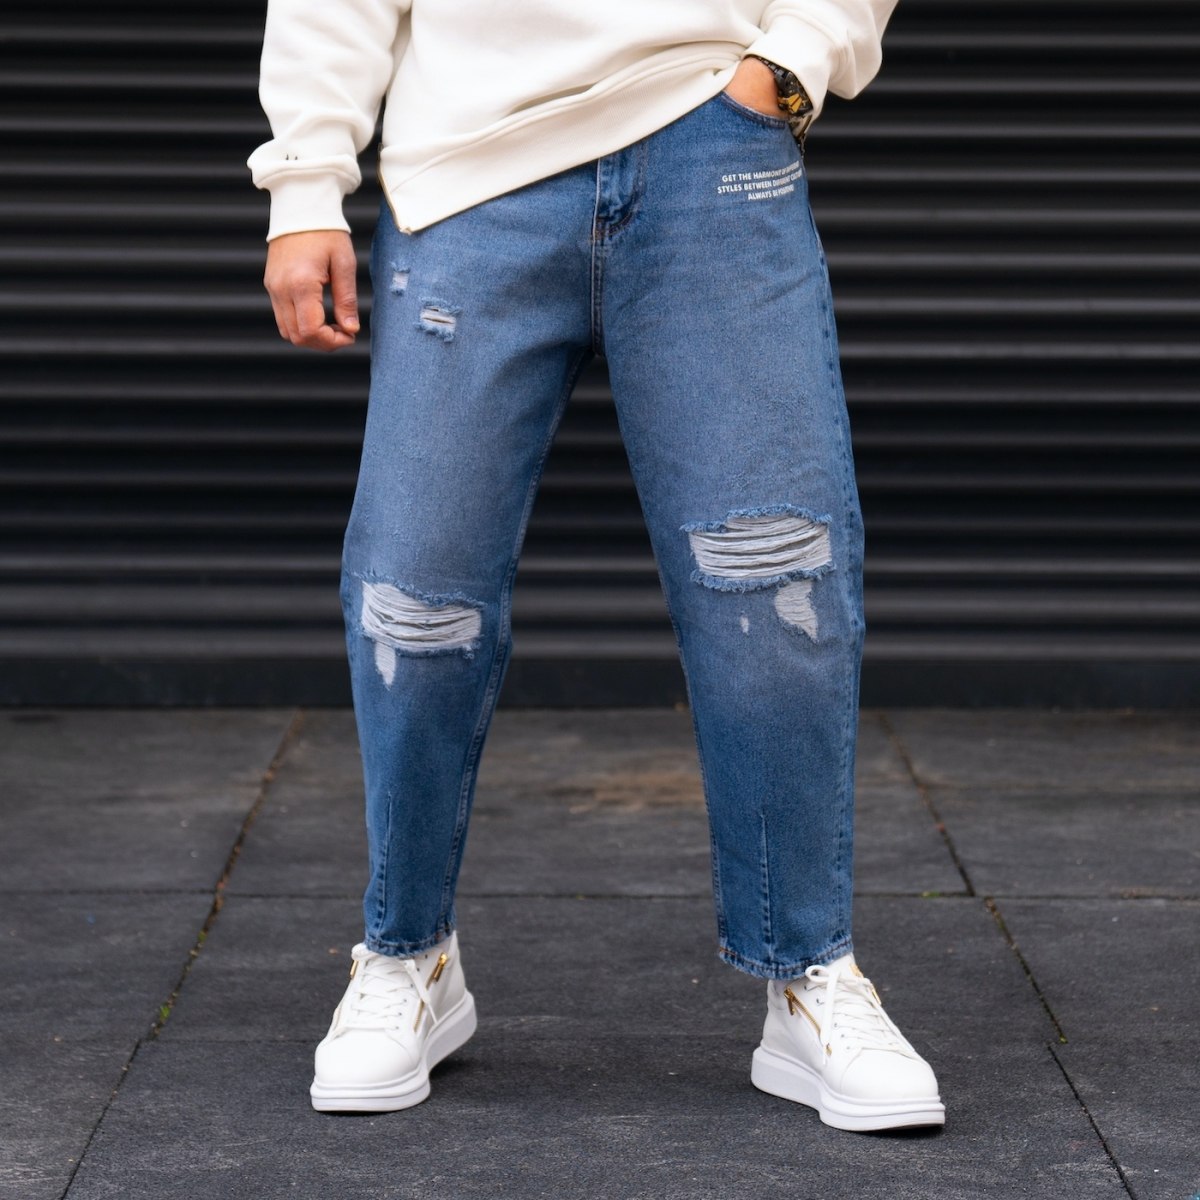 Buy LUOBANIU Men's Vintage Hip Hop Style Baggy Jeans Loose Fit Dance  Skateboard Denim Pants (36) at Amazon.in